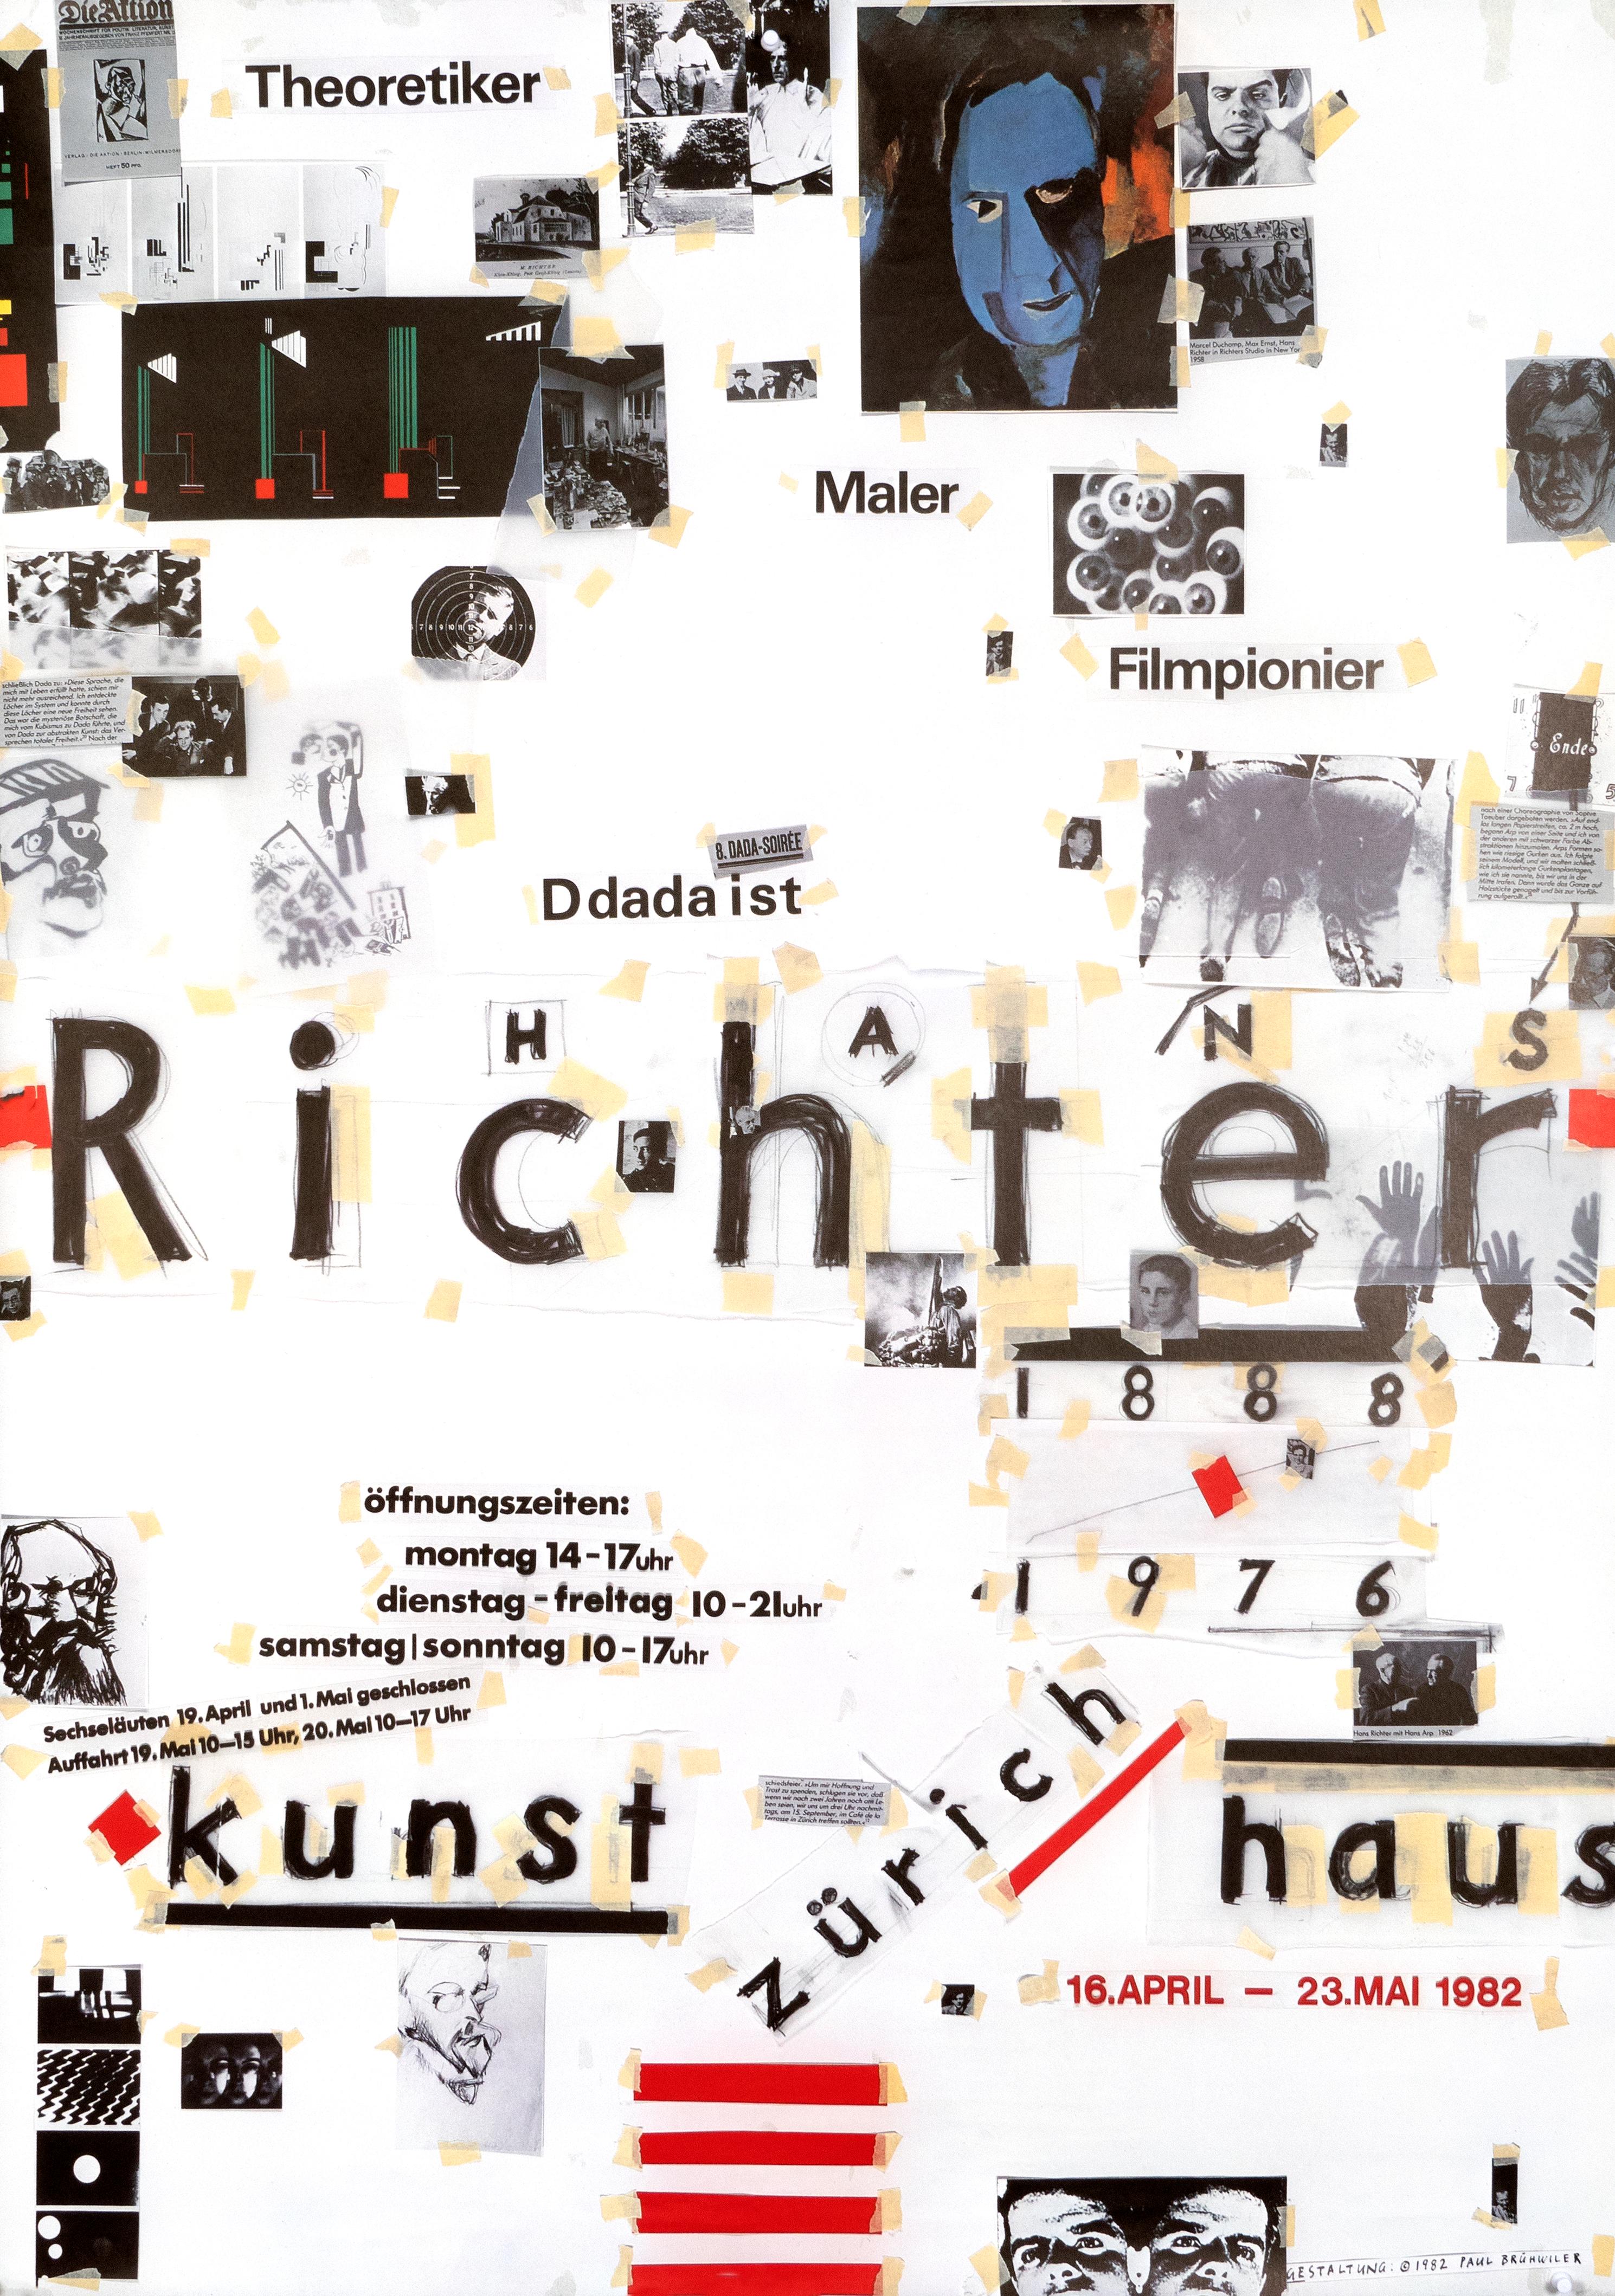 "Hans Richter - Kunsthaus Zurich" Original Vintage Art Exhibition Poster - Print by Paul Bruhwiler